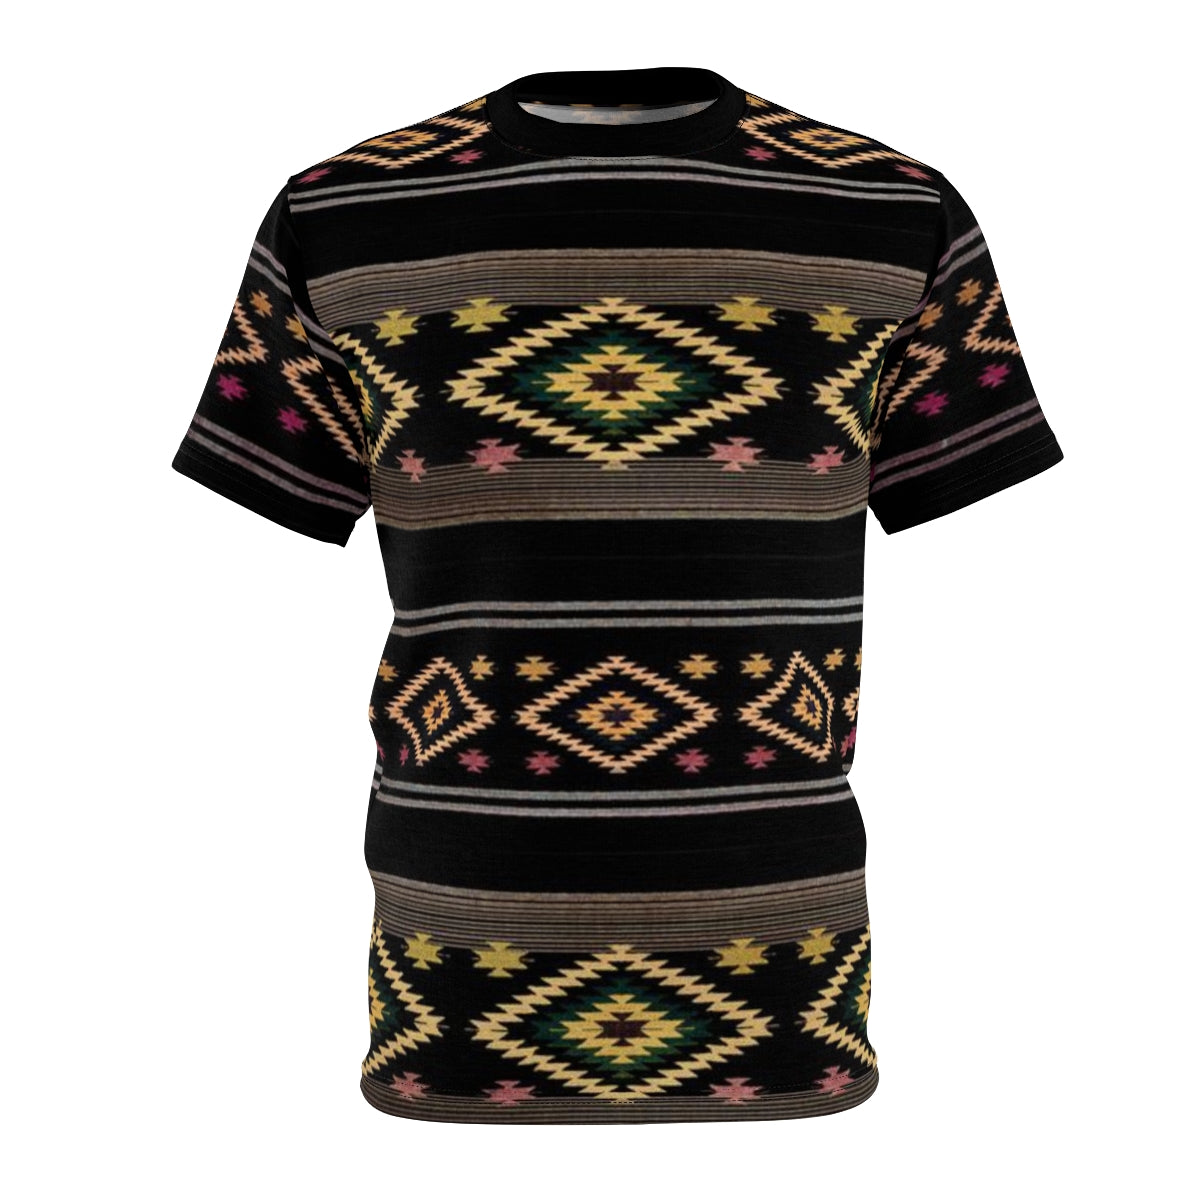 Funky Shaman Black Gold | Native American T-Shirt